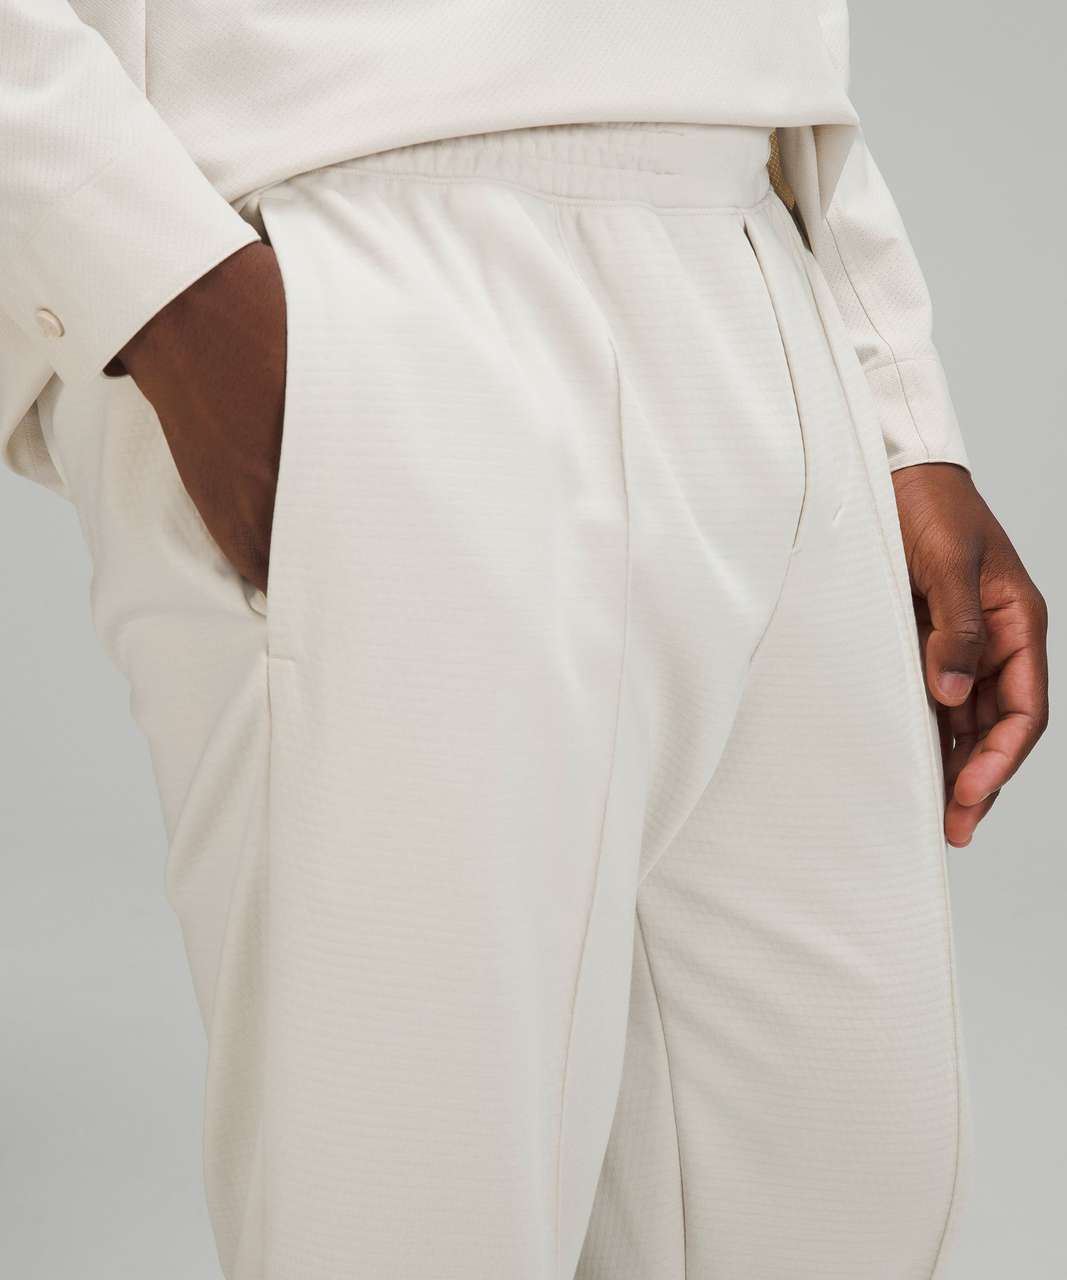 Lululemon Gridliner Pull-On Trouser 26" - Heathered Natural Ivory